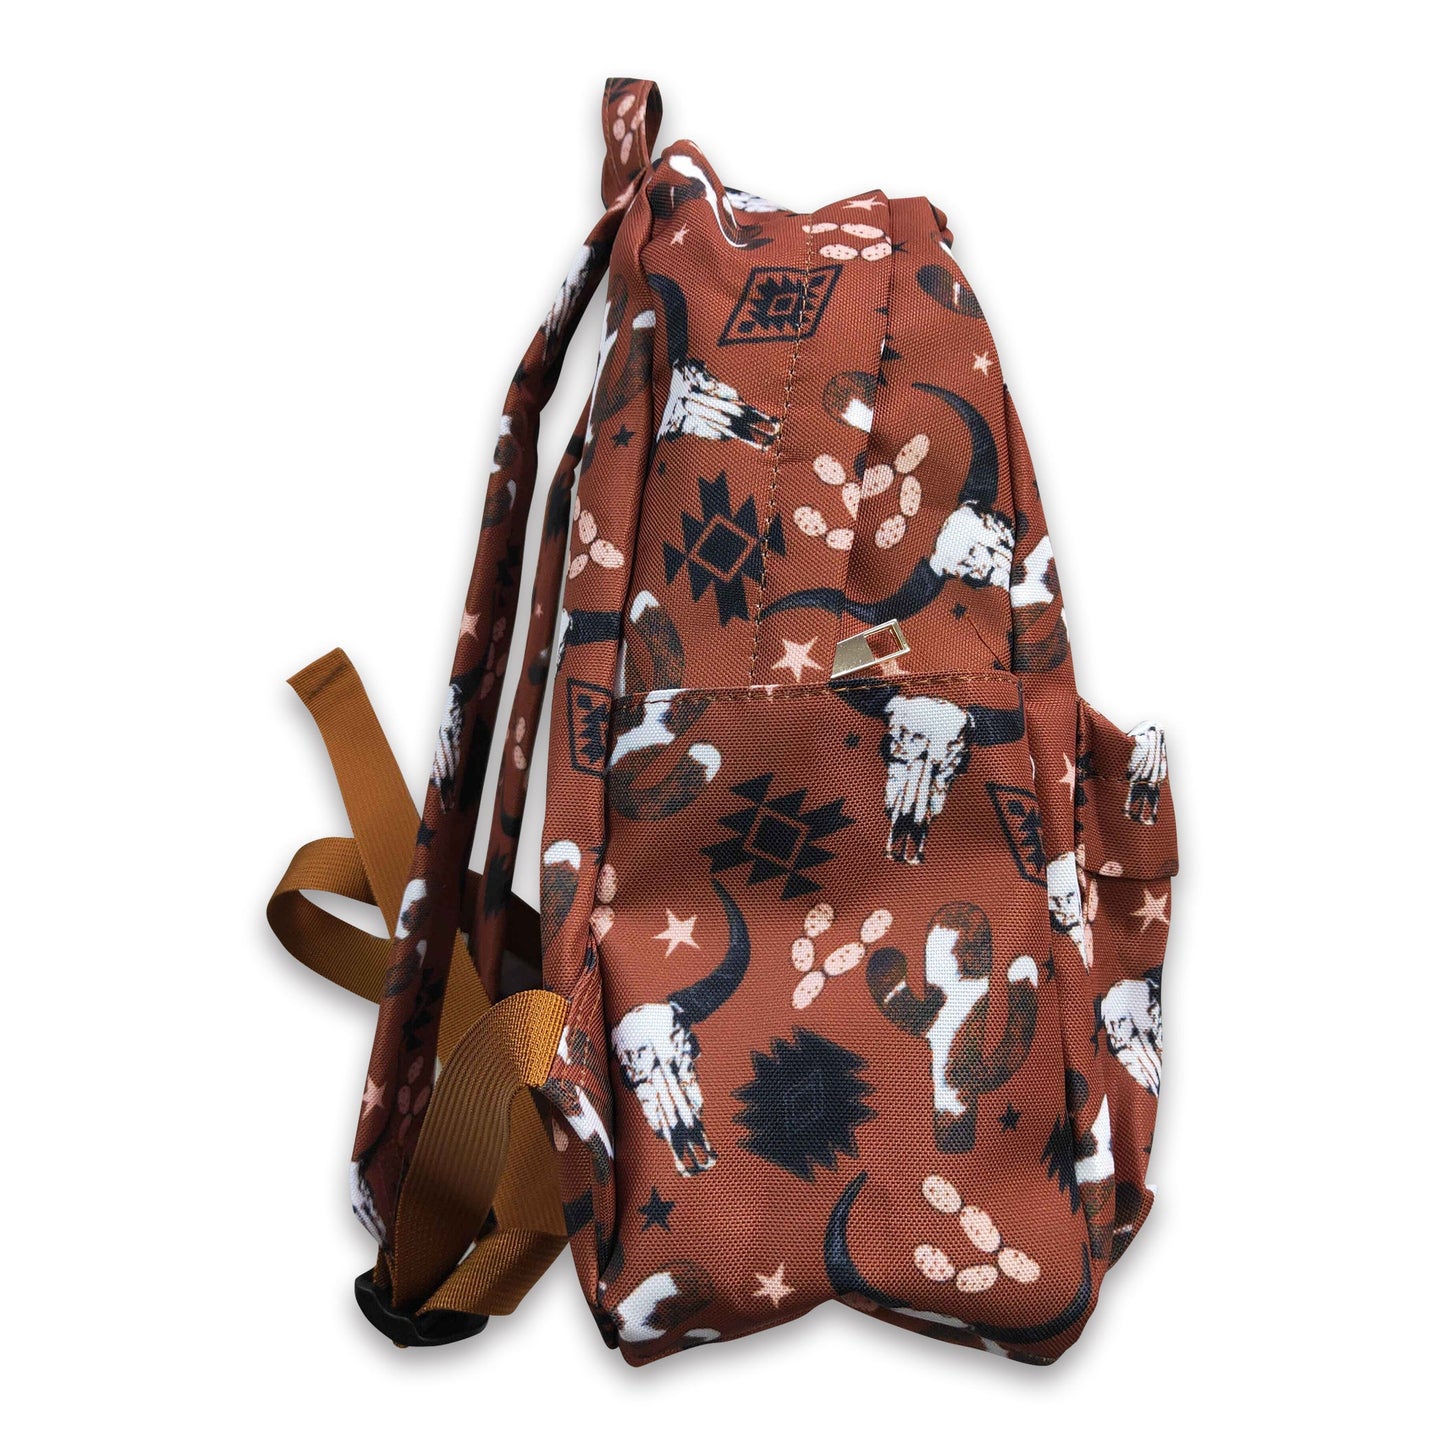 Cactus bull skull western backpack kids girls back to school bags